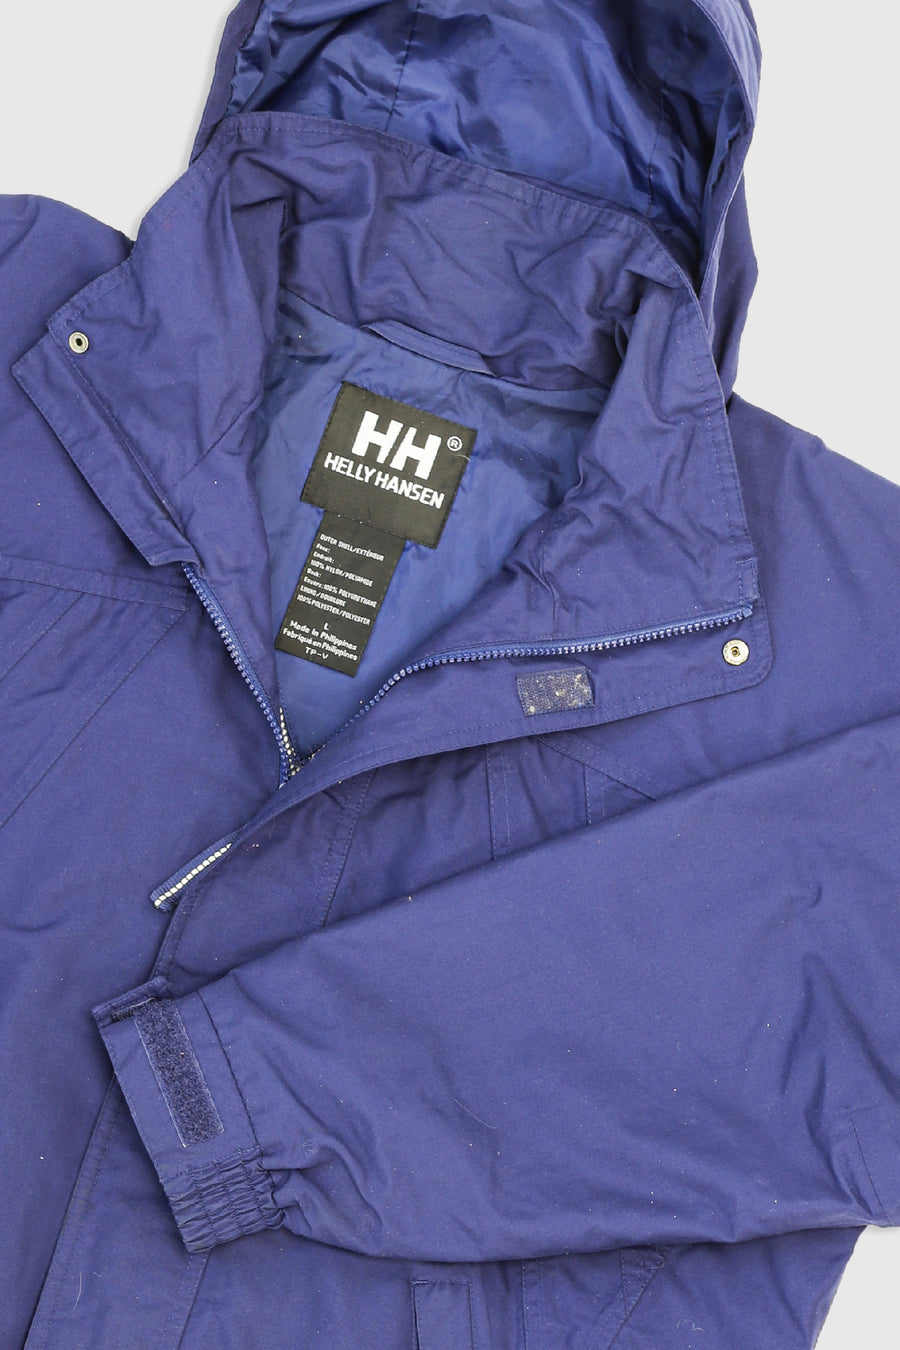 Vintage Helly Hansen Windbreaker Jacket - L